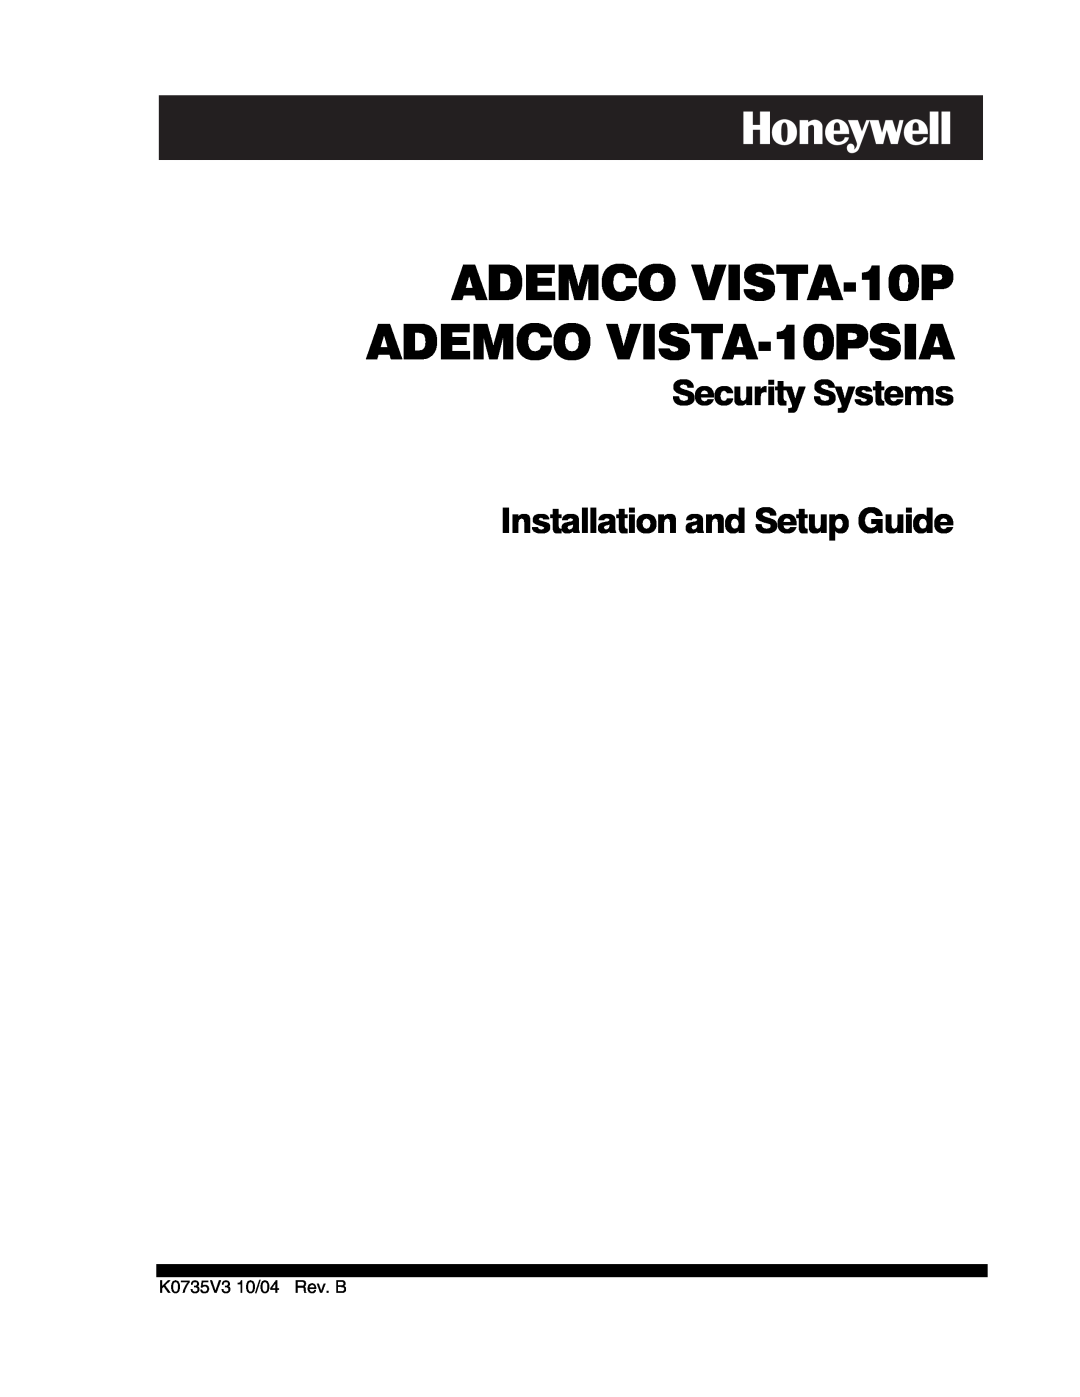 Honeywell setup guide ADEMCO VISTA-10P ADEMCO VISTA-10PSIA, Security Systems Installation and Setup Guide 